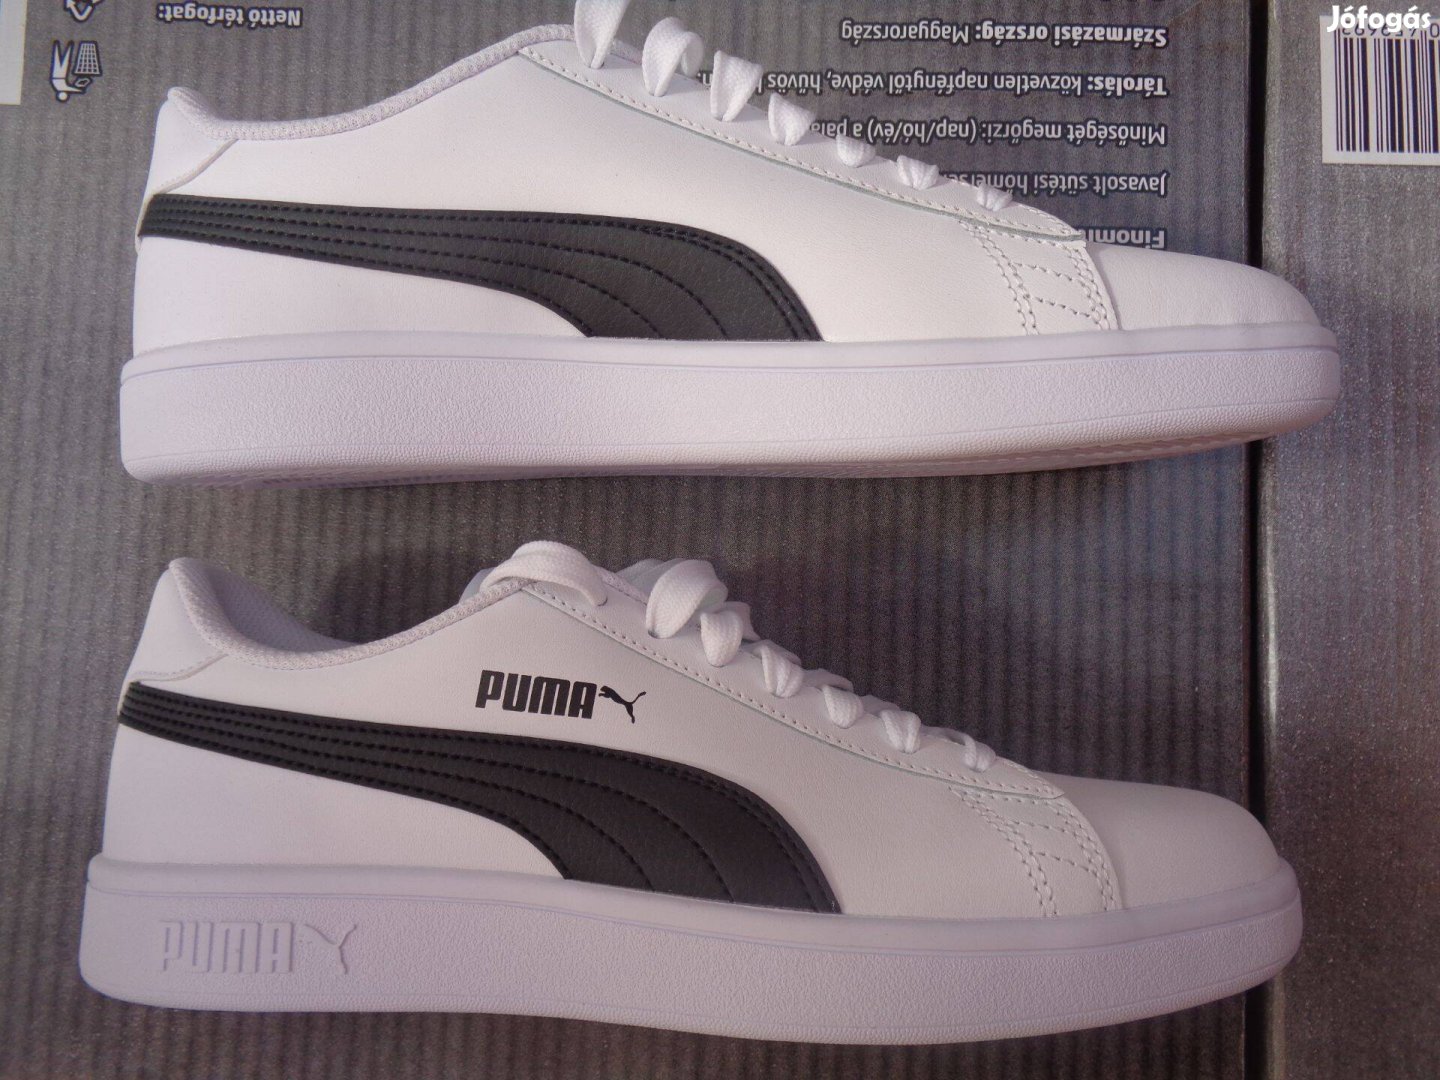 Új eredeti Puma Puma Smash v2 L 43-as 43 férfi bőr sportcipő cipő 2 db